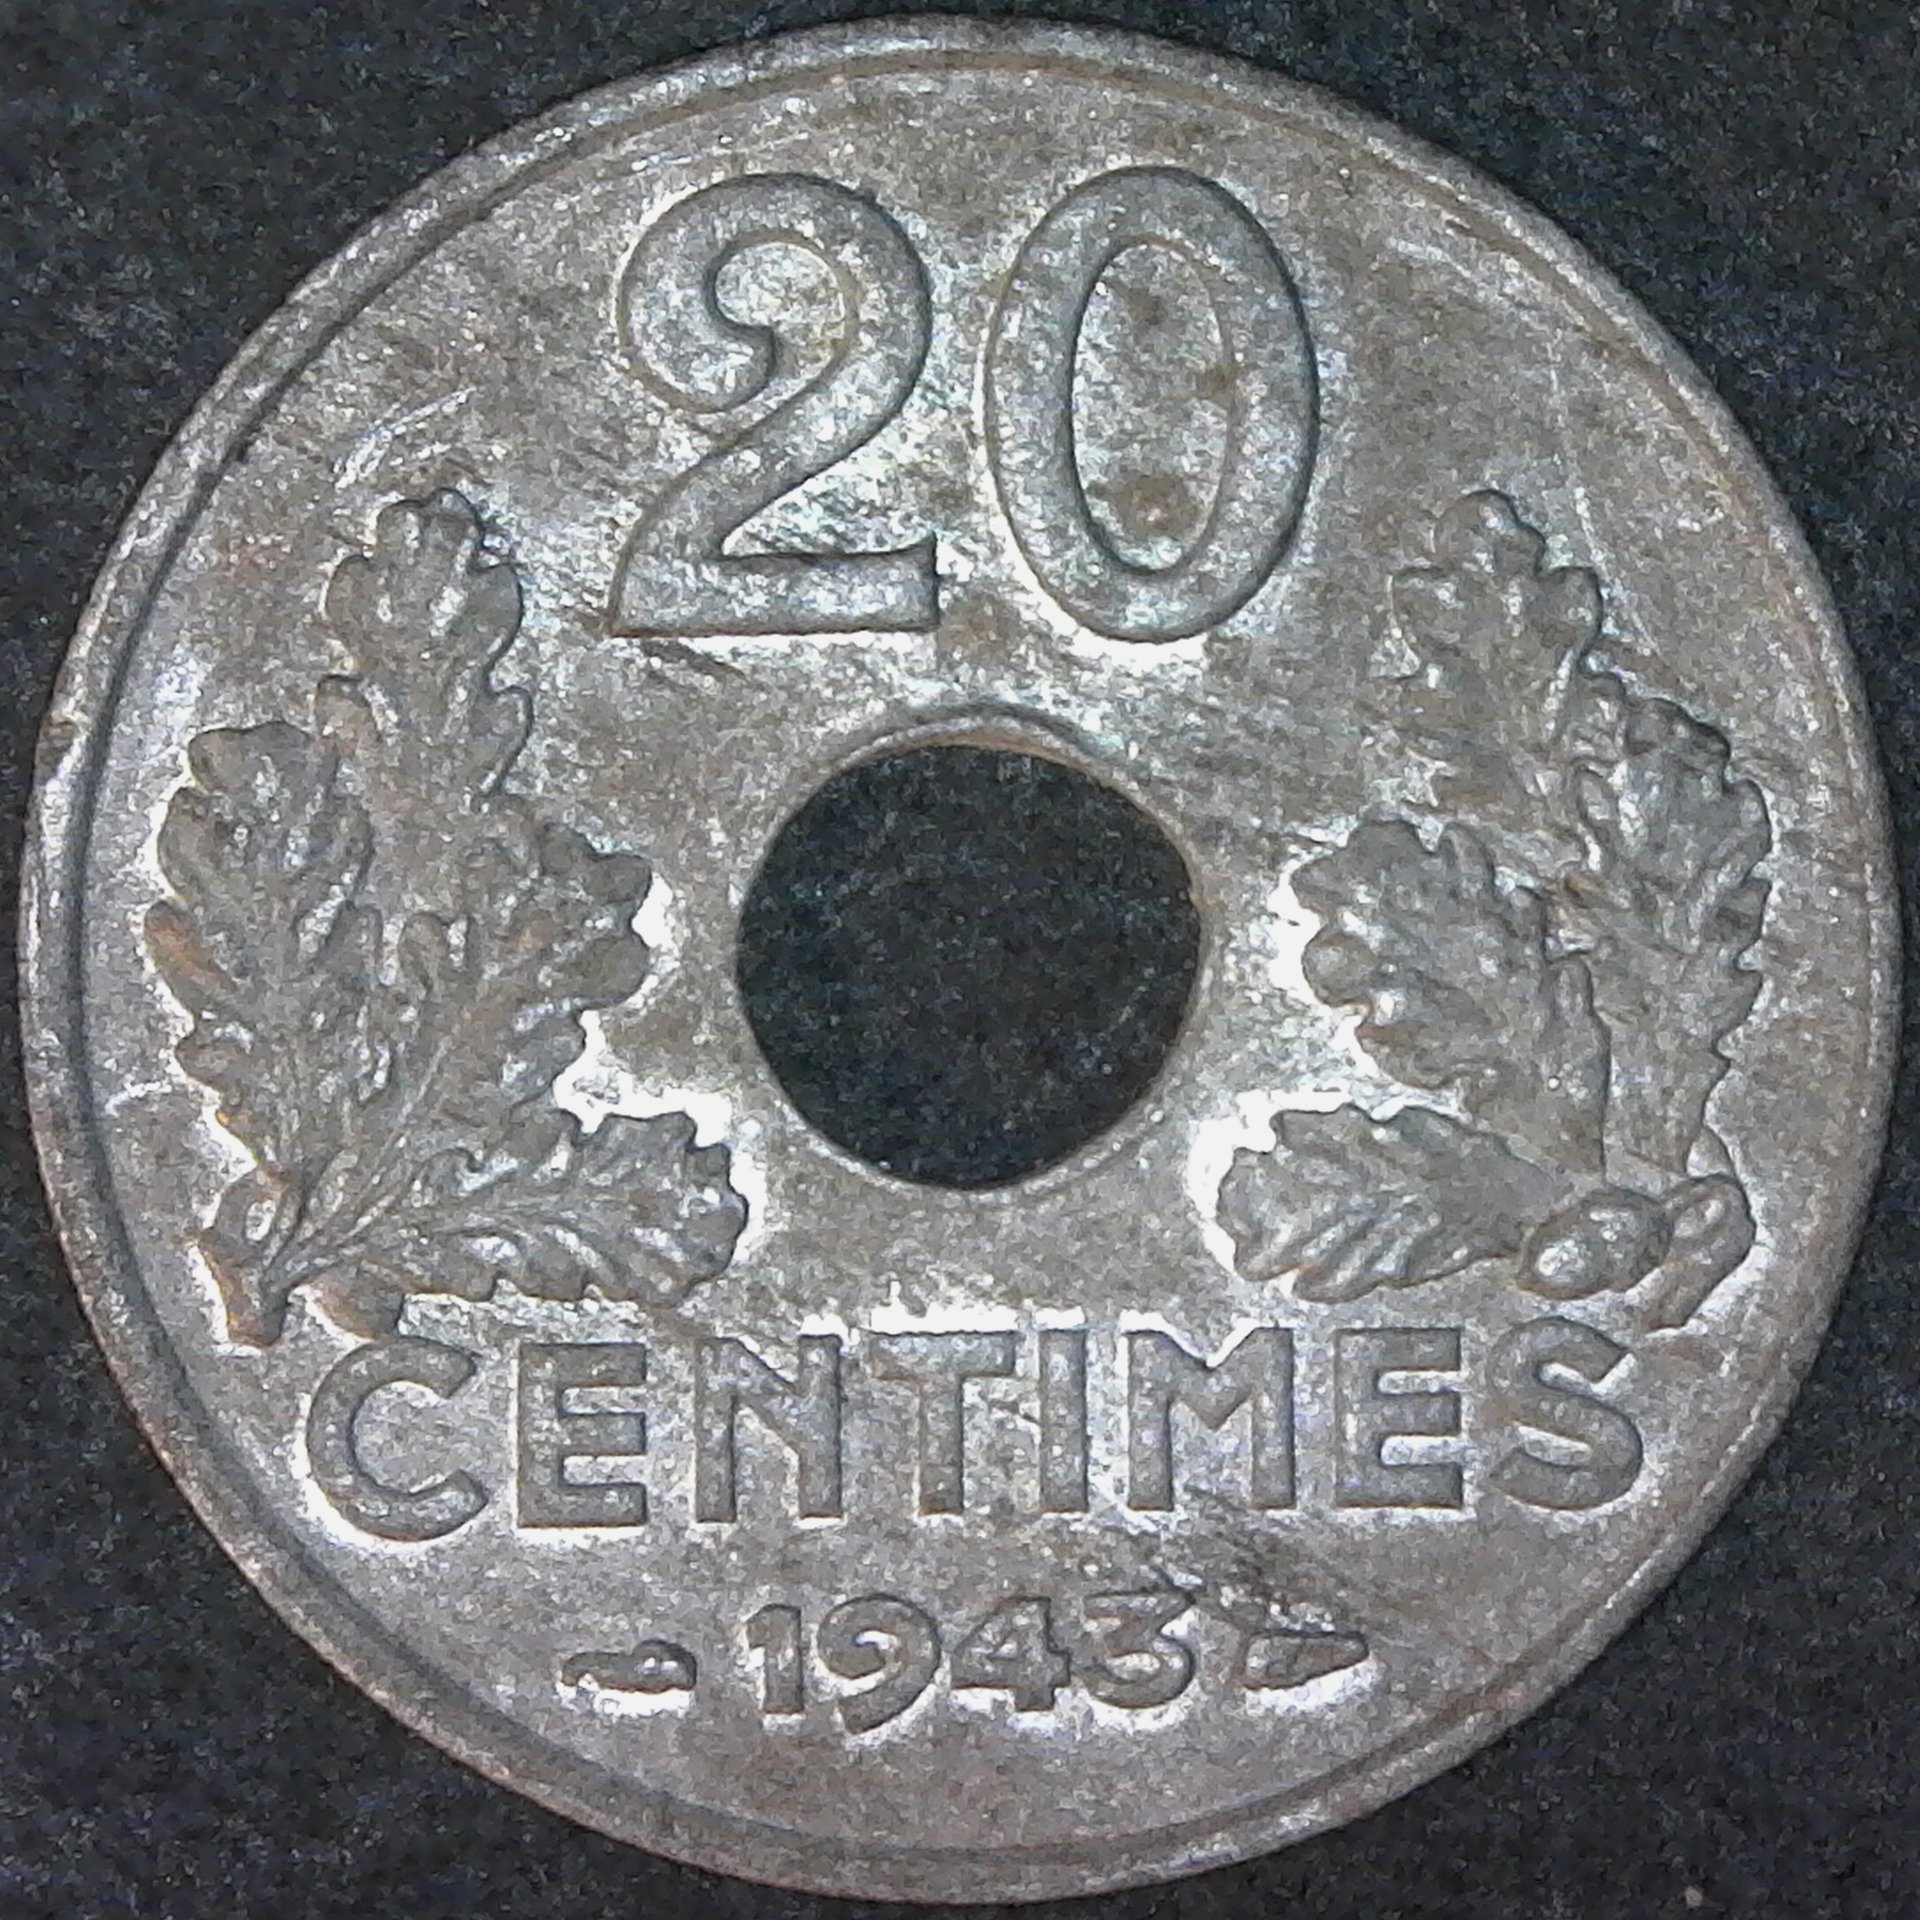 France 20 centimes 1943 obverse.jpg